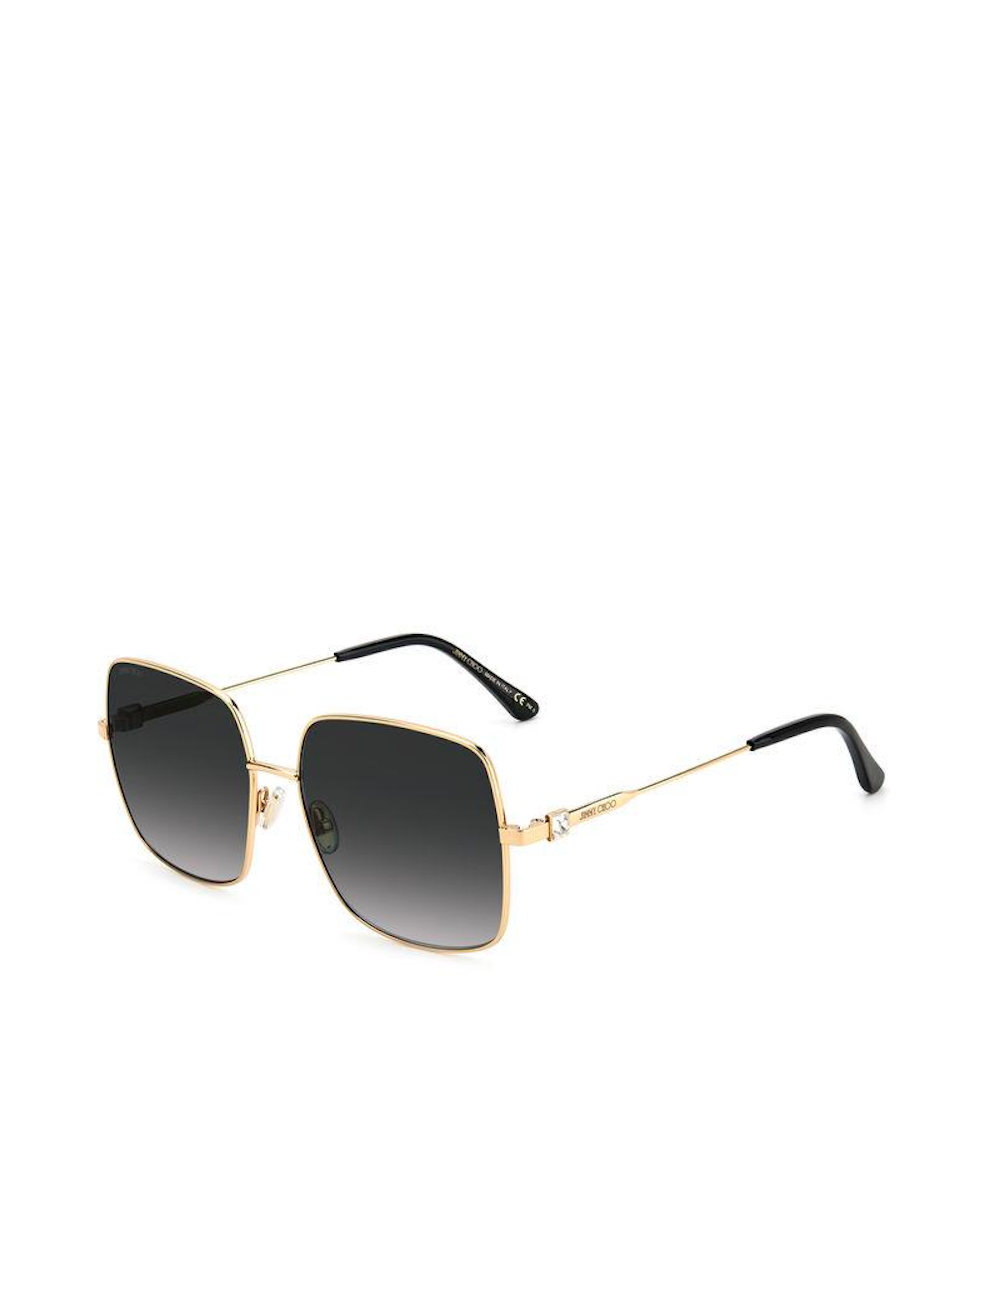 Jimmy Choo LILI/S 2M2 sunglasses for women – Ottica Mauro